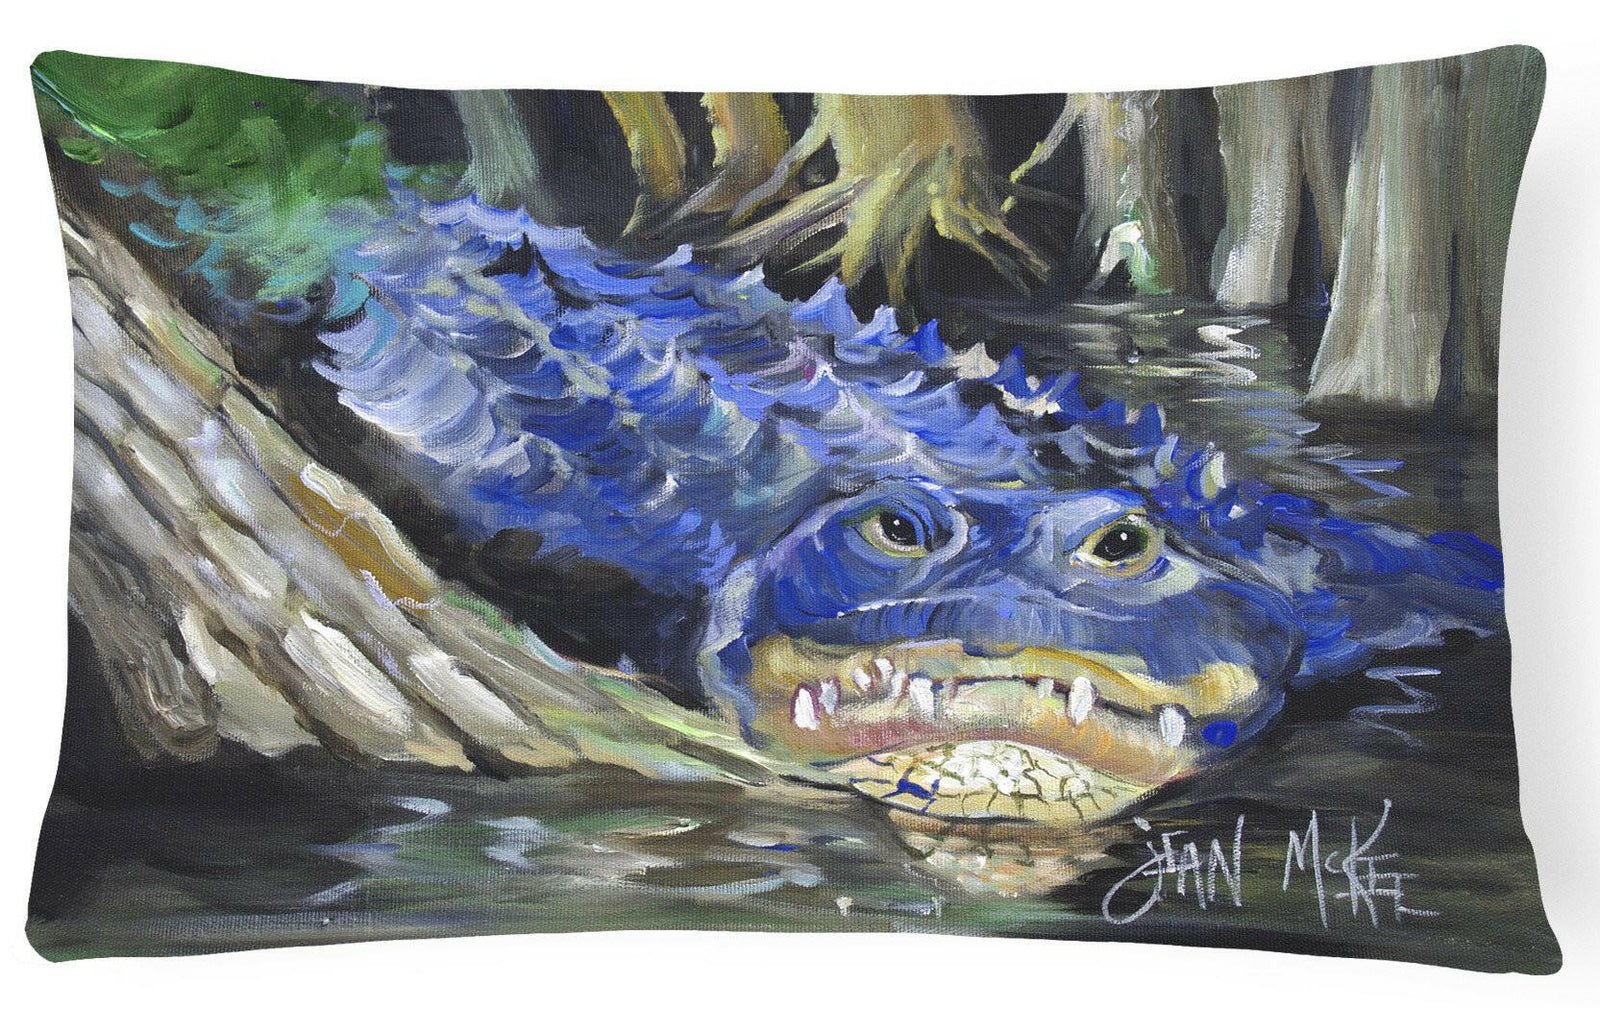 Blue Alligator Canvas Fabric Decorative Pillow JMK1135PW1216 by Caroline's Treasures